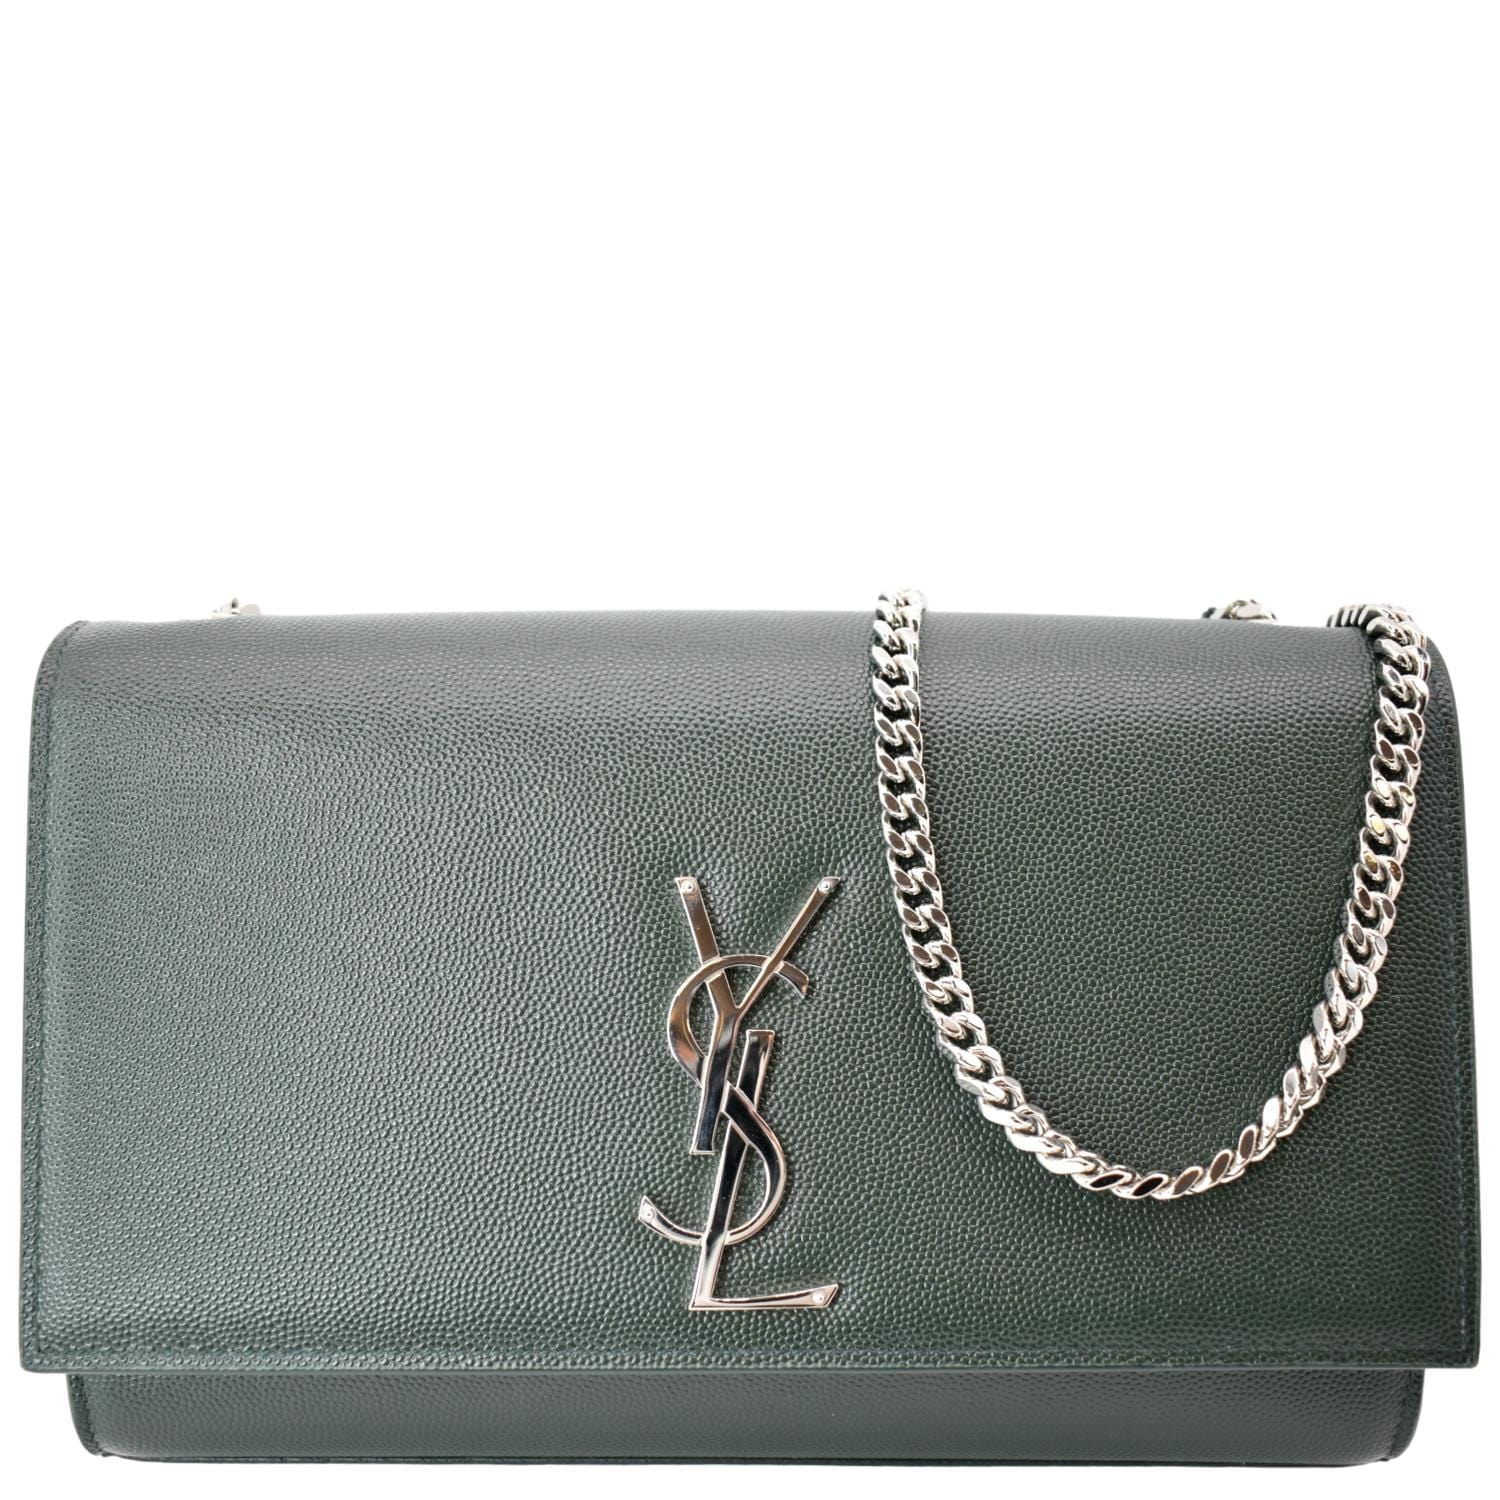 Yves Saint Laurent 'Kate' Medium Bag: Authenticity Guaranteed